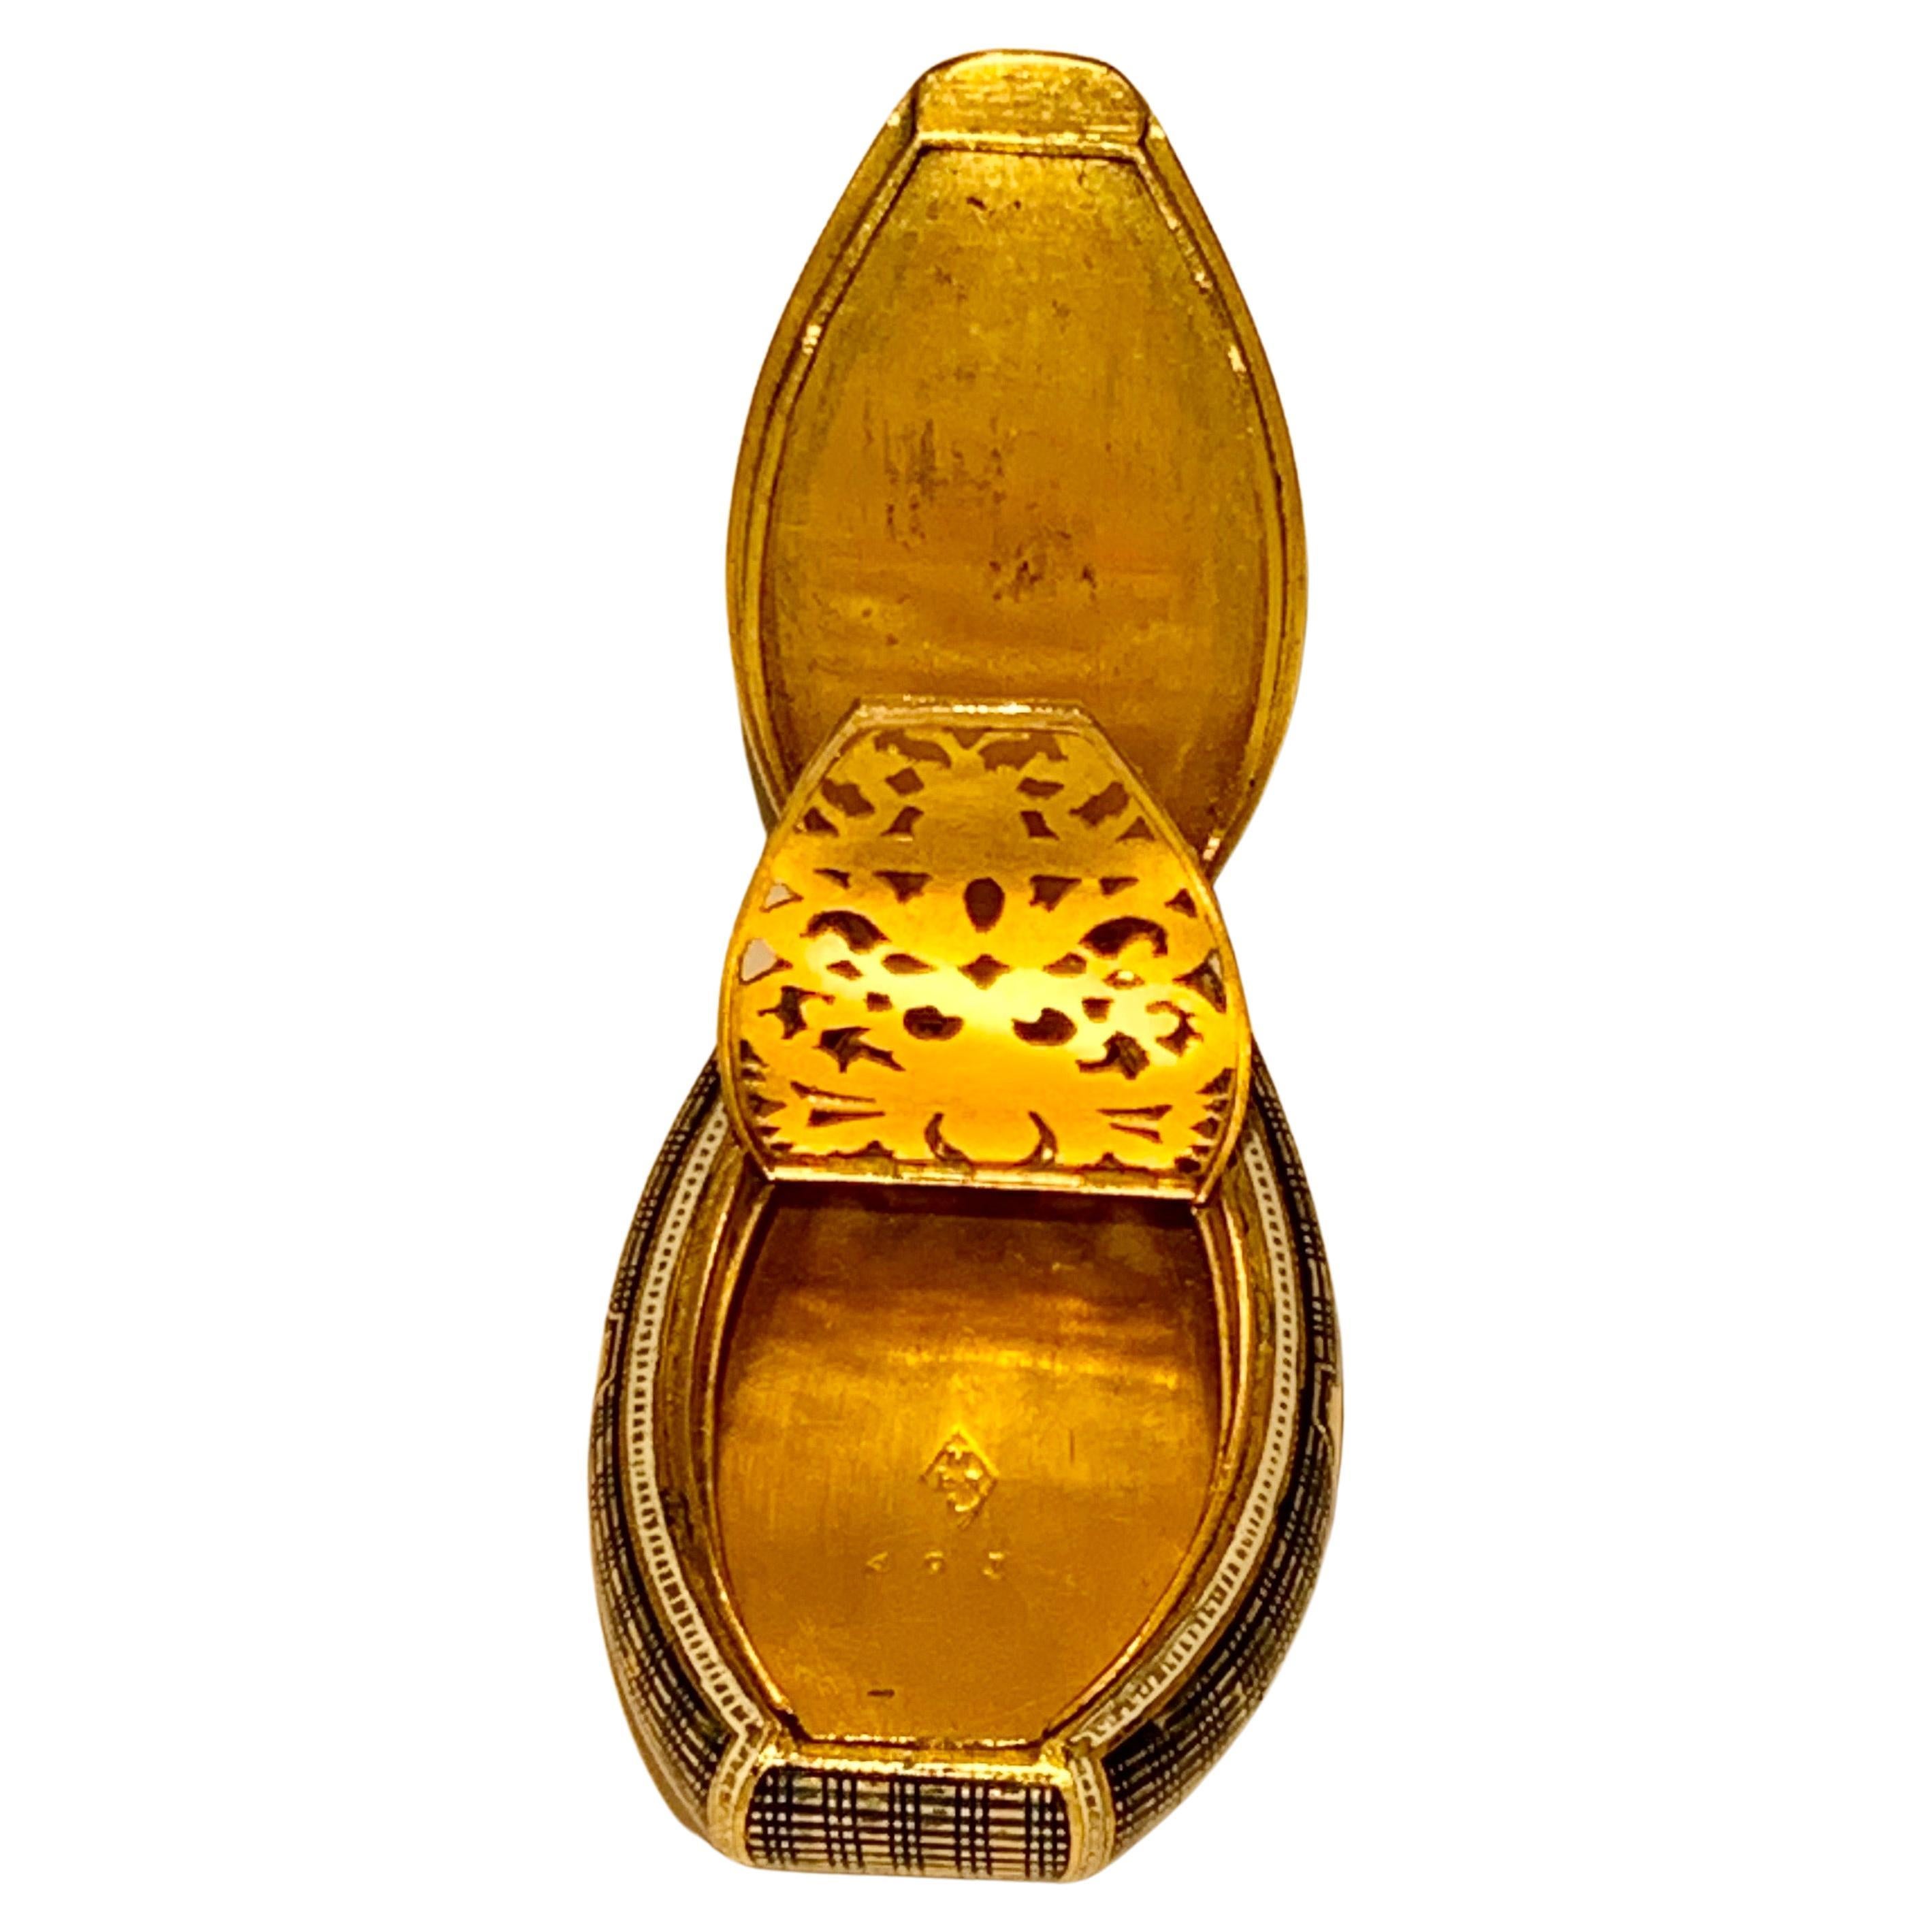 A Rare Antique Swiss Gold & Enamel Jewelled Vinaigrette Box Late 18th C For Sale 5